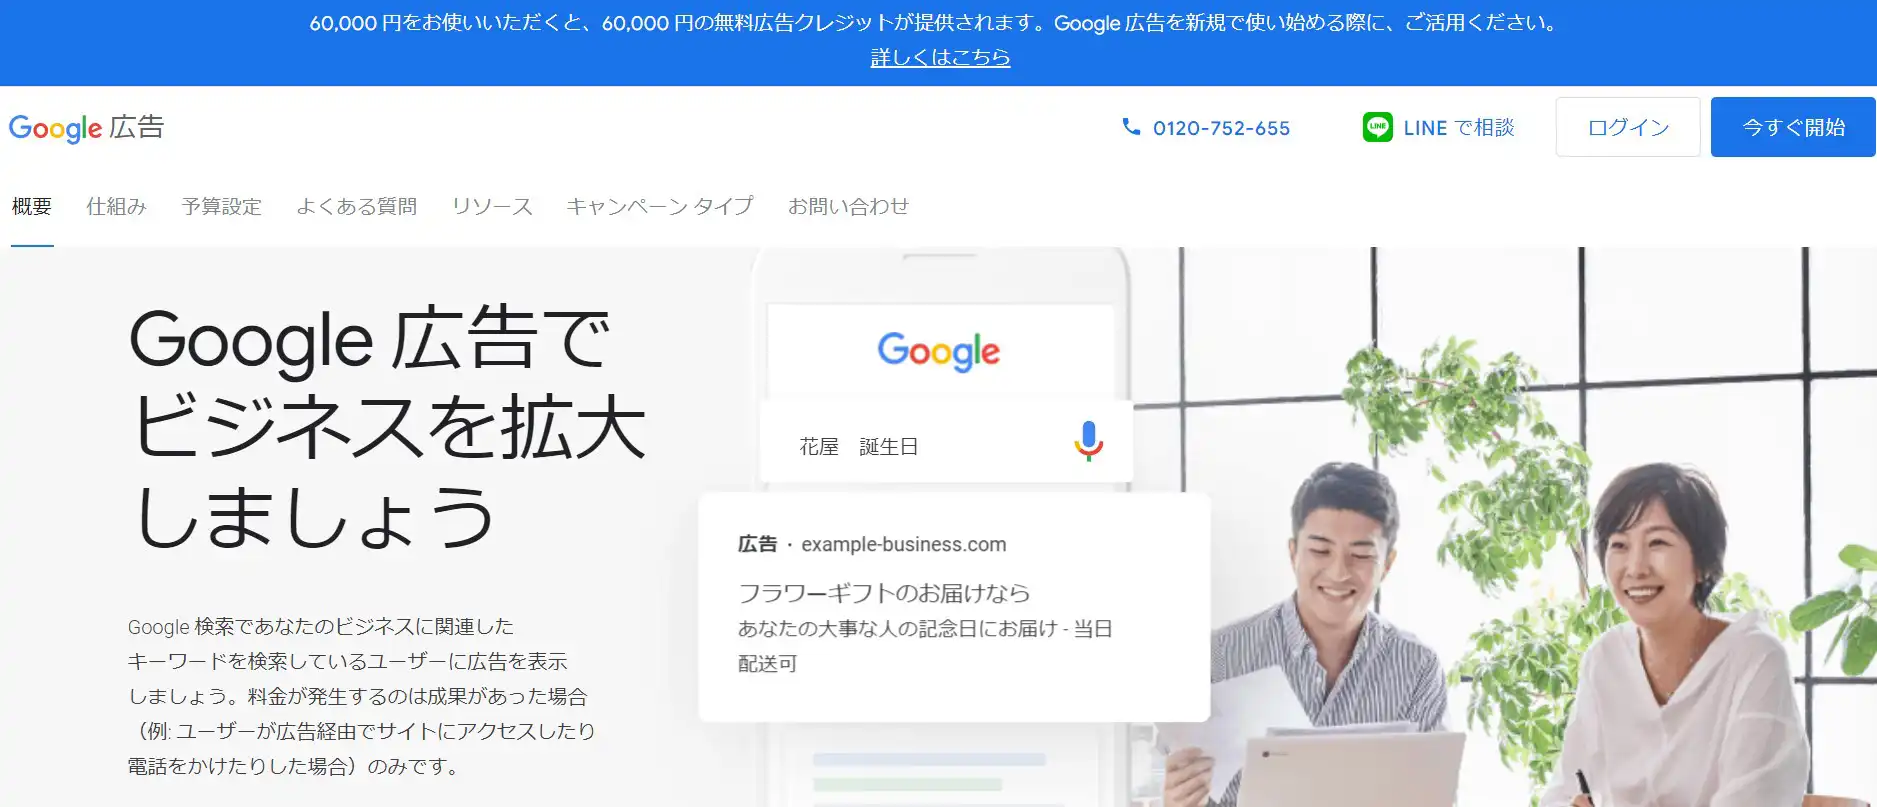 Google広告-1